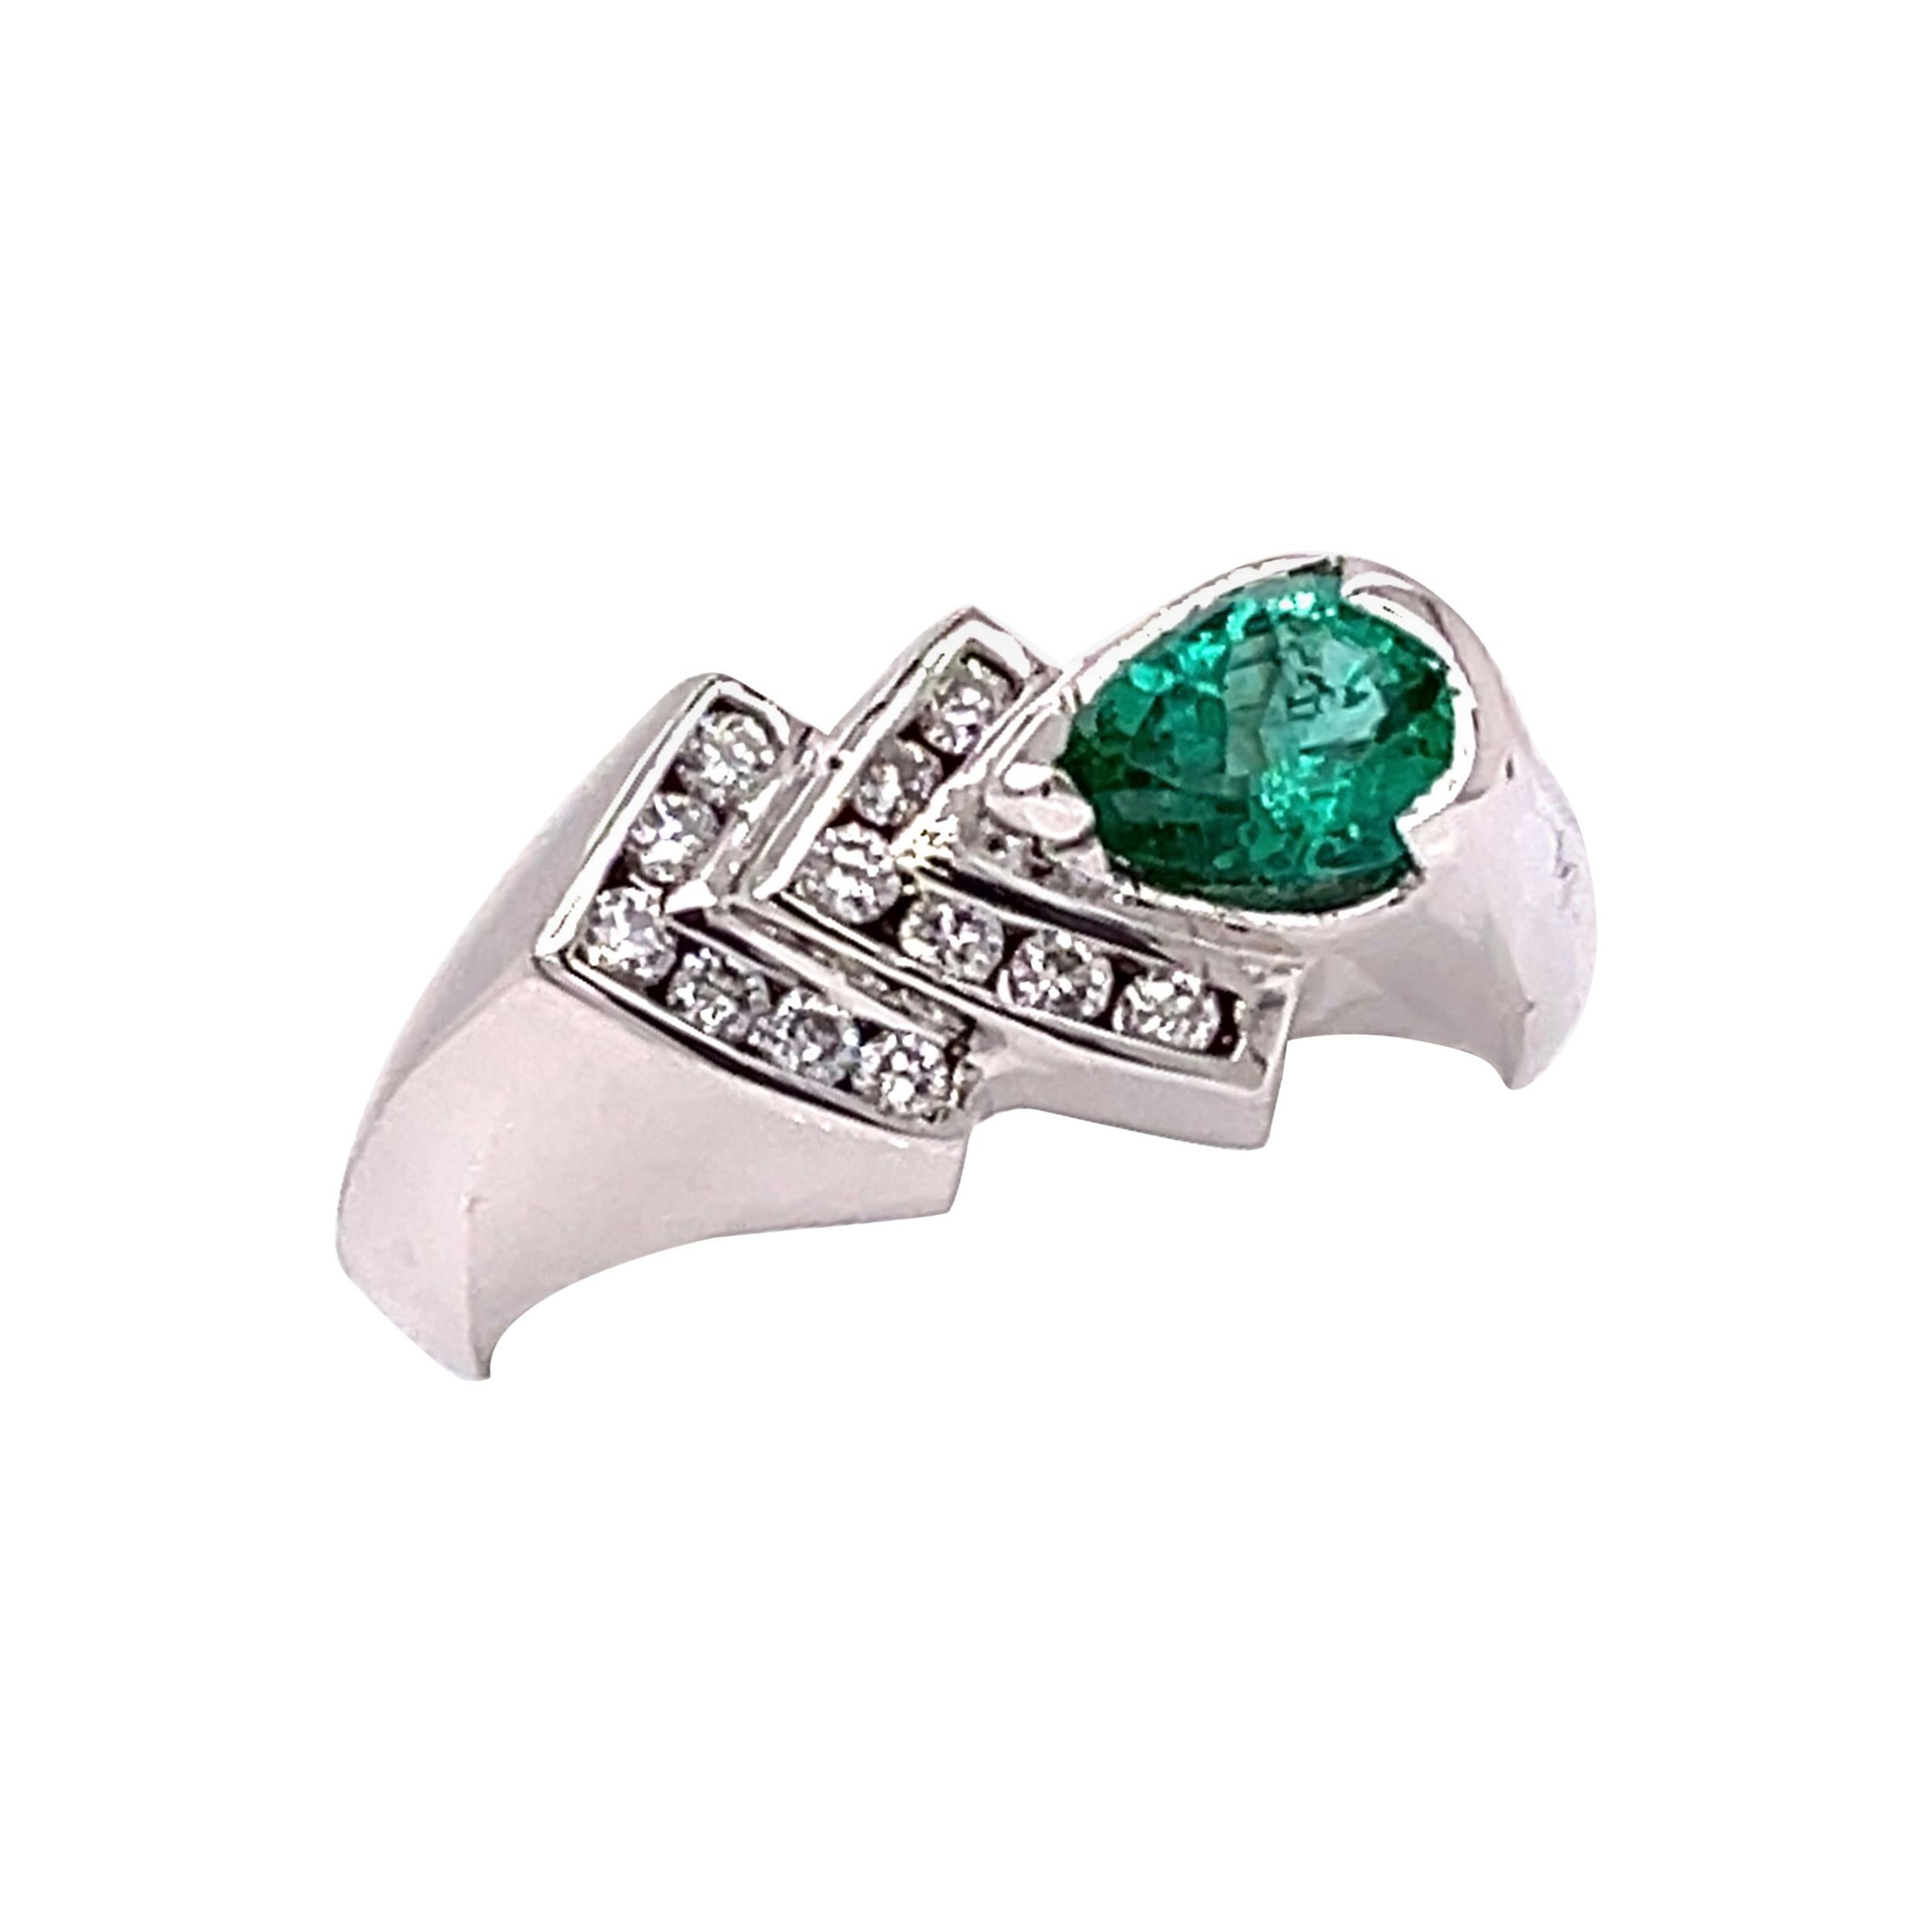 0.51 Carat Natural Zambian Emerald Gold Ring with Diamonds